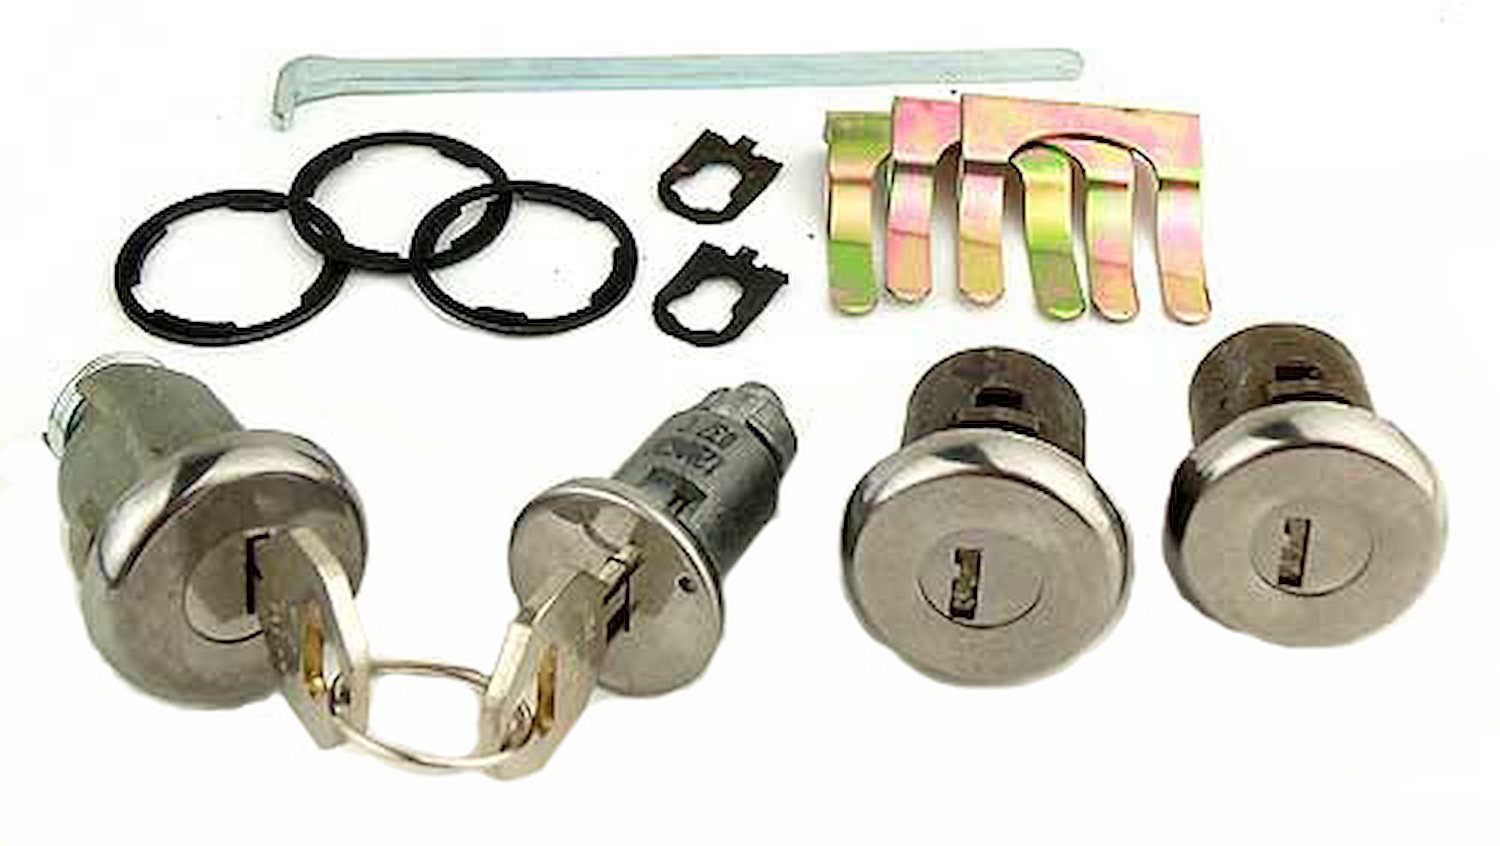 Ignition, Door & Trunk Lock Set Fits Select 1964-1965 GM Models [Original Octagon Keys]